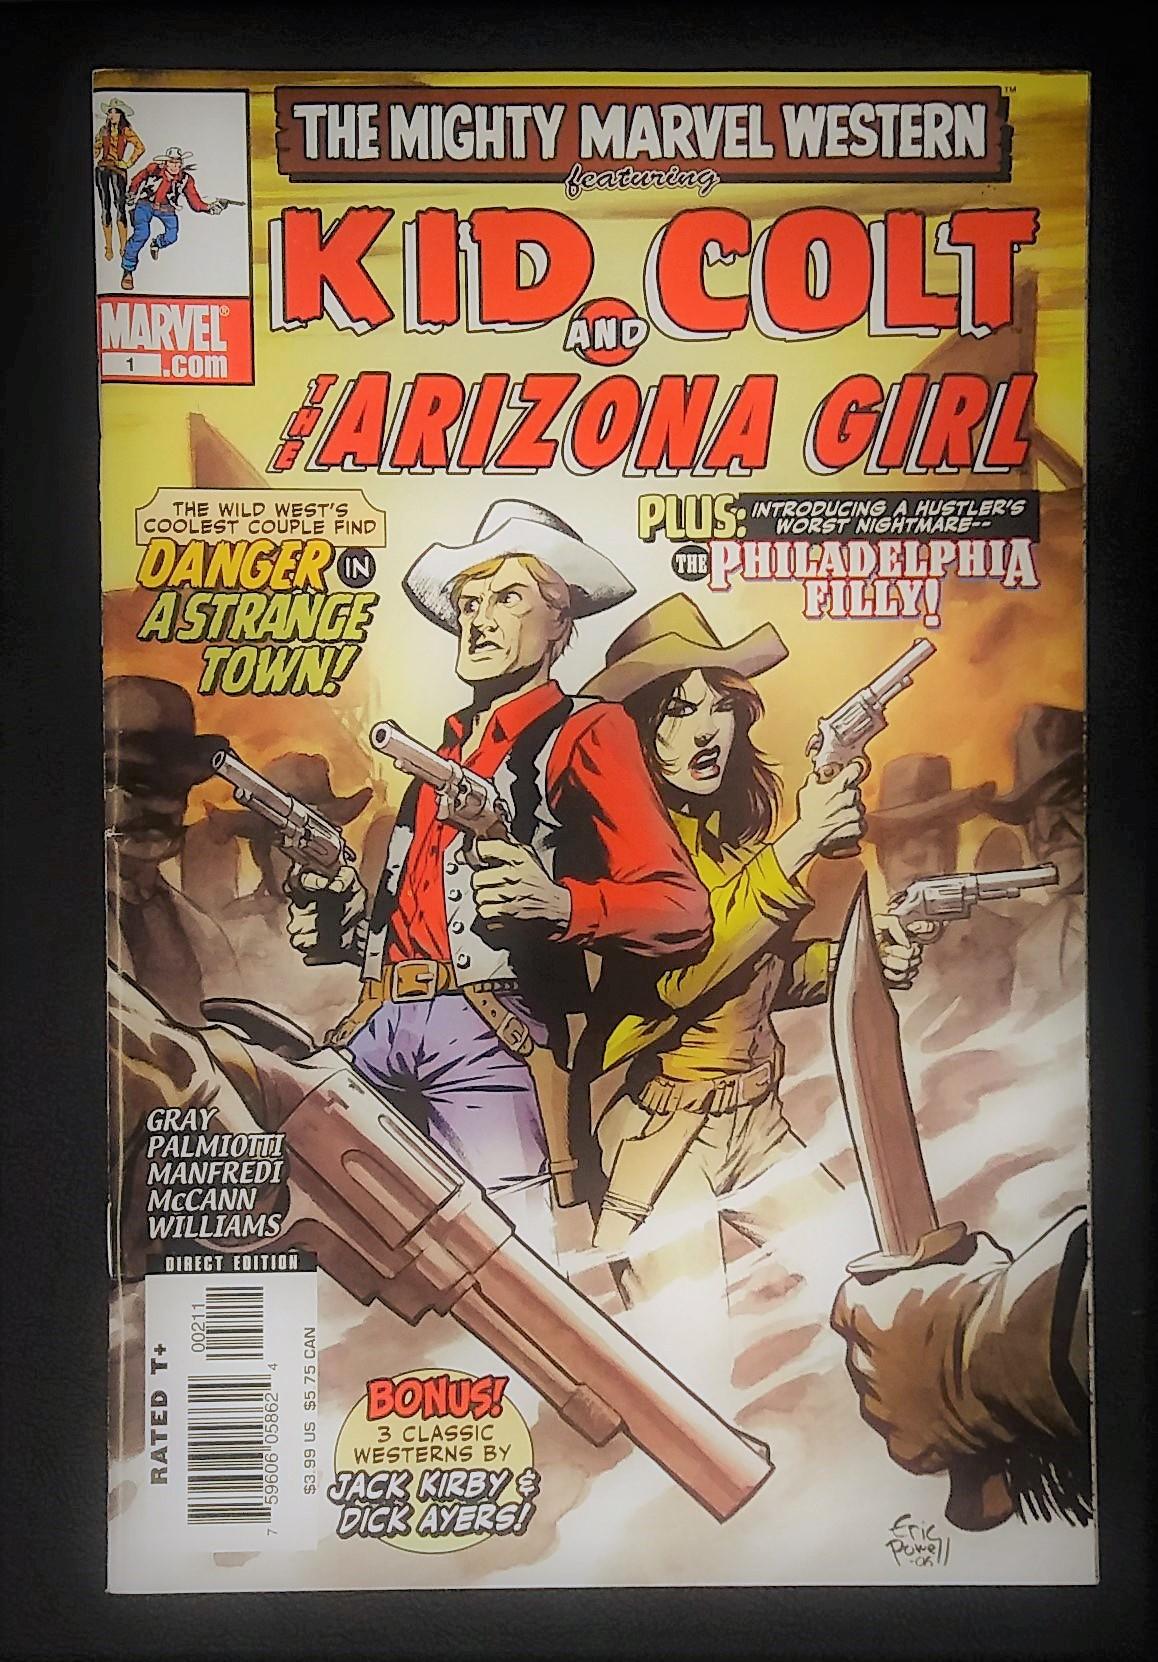 Marvel Westerns: Kid Colt and Arizona Girl #1